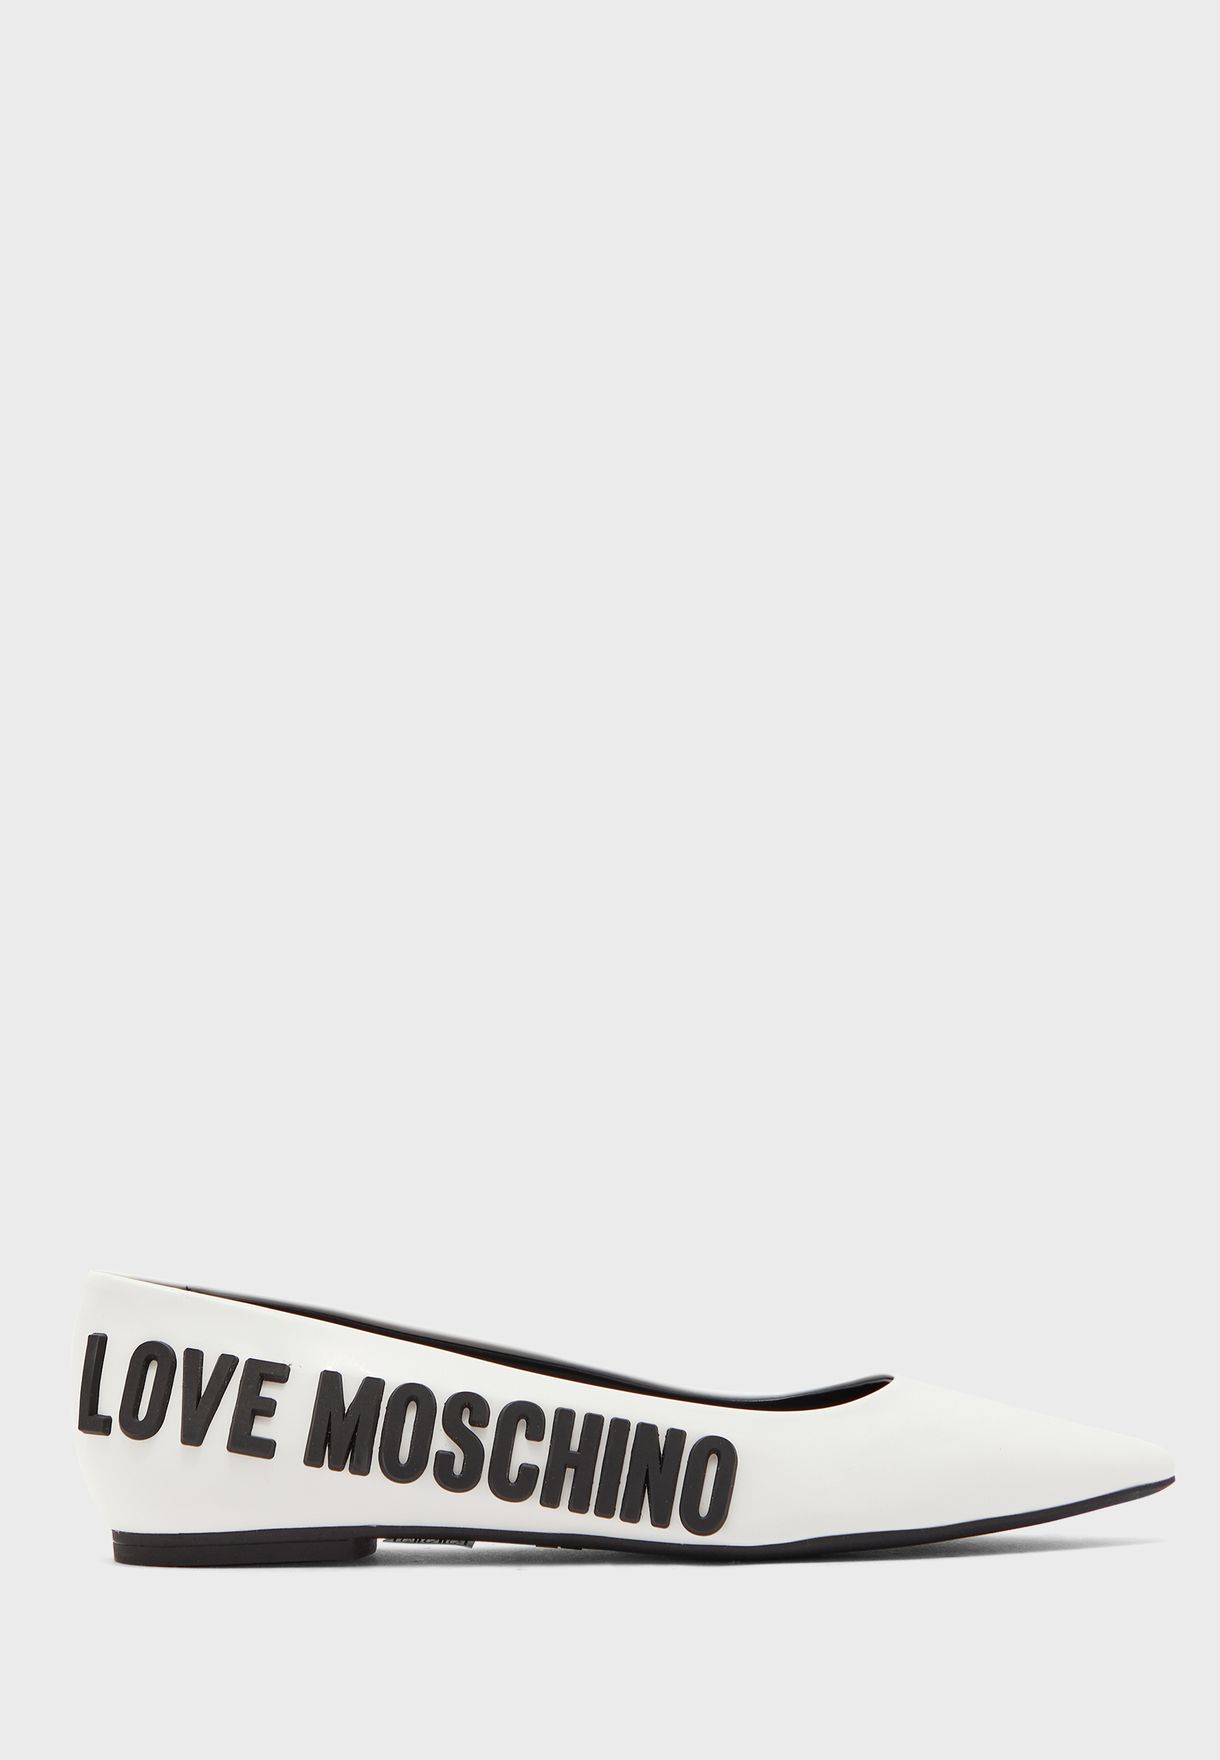 love moschino back to school